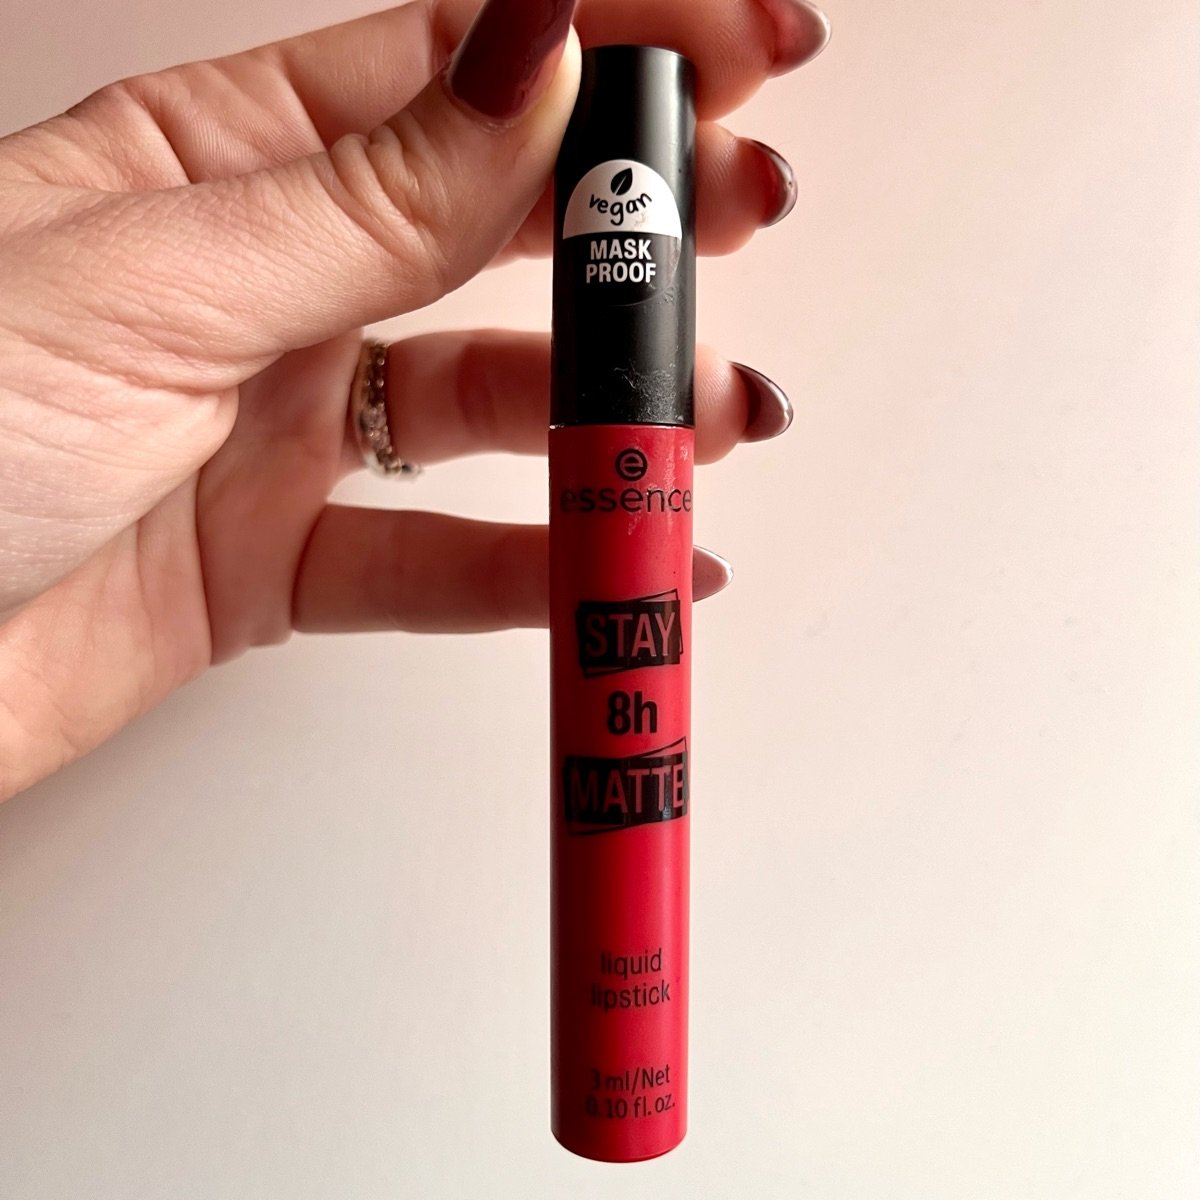 Essence Liquid lipstick stay 8h matte Reviews | abillion